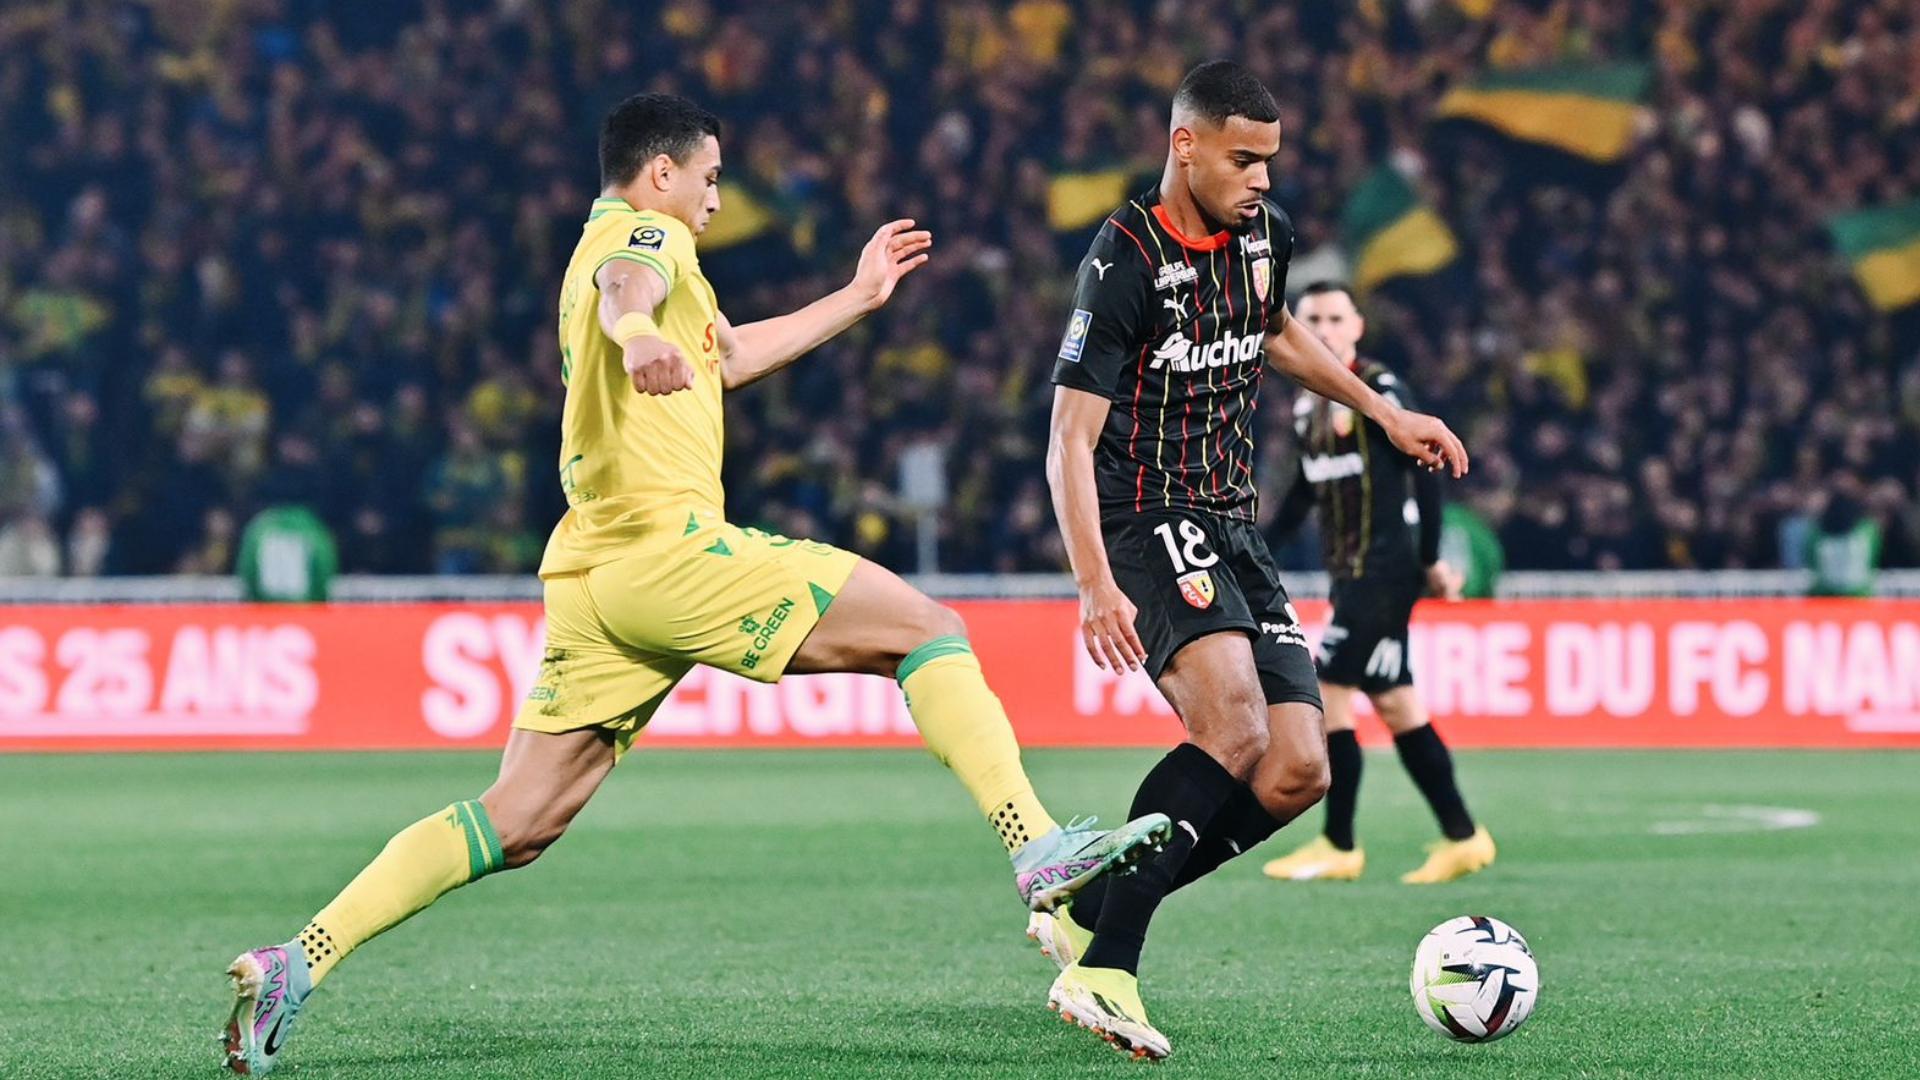 VIDEO Ligue 1 Highlights: Nantes vs Lens